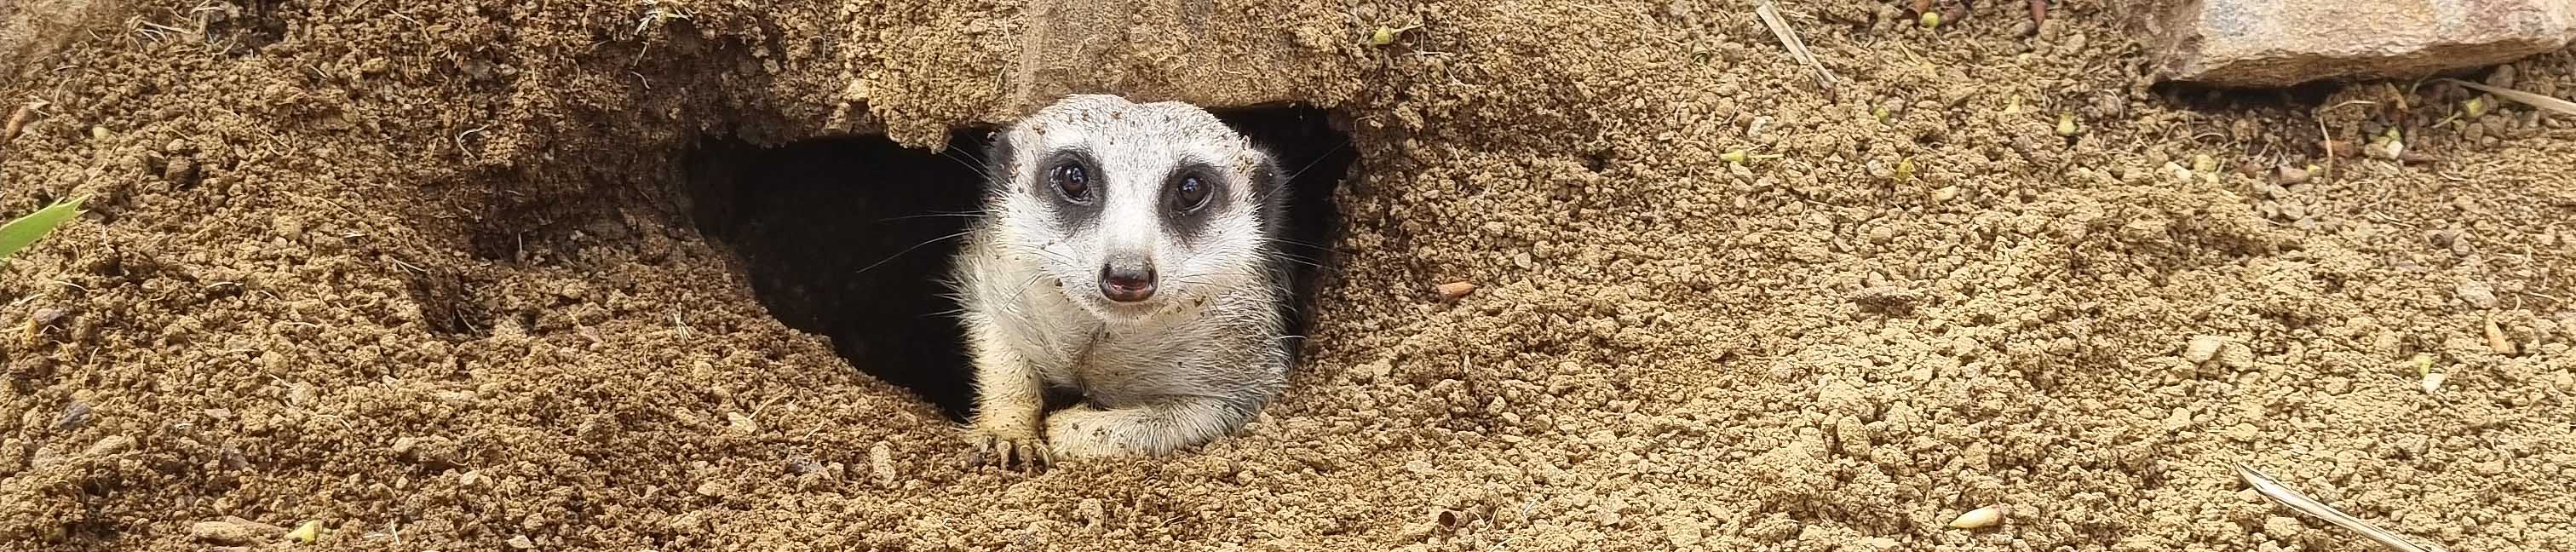 Meerkat peeking out of its burrow | Samantha Bell